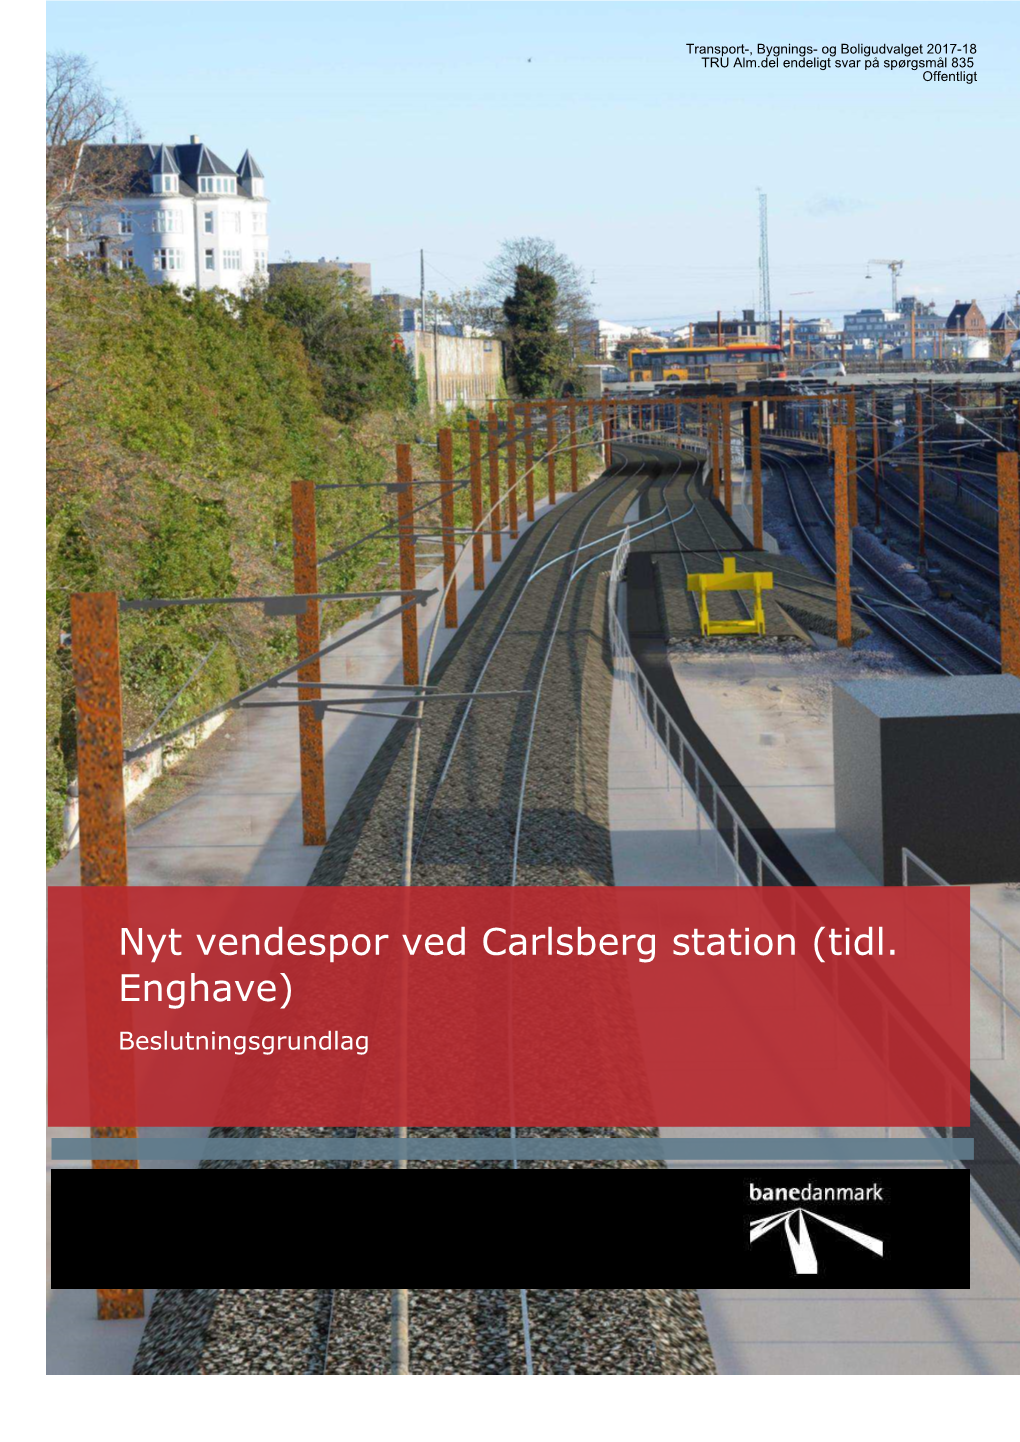 Nyt Vendespor Ved Carlsberg Station (Tidl. Enghave) Beslutningsgrundlag